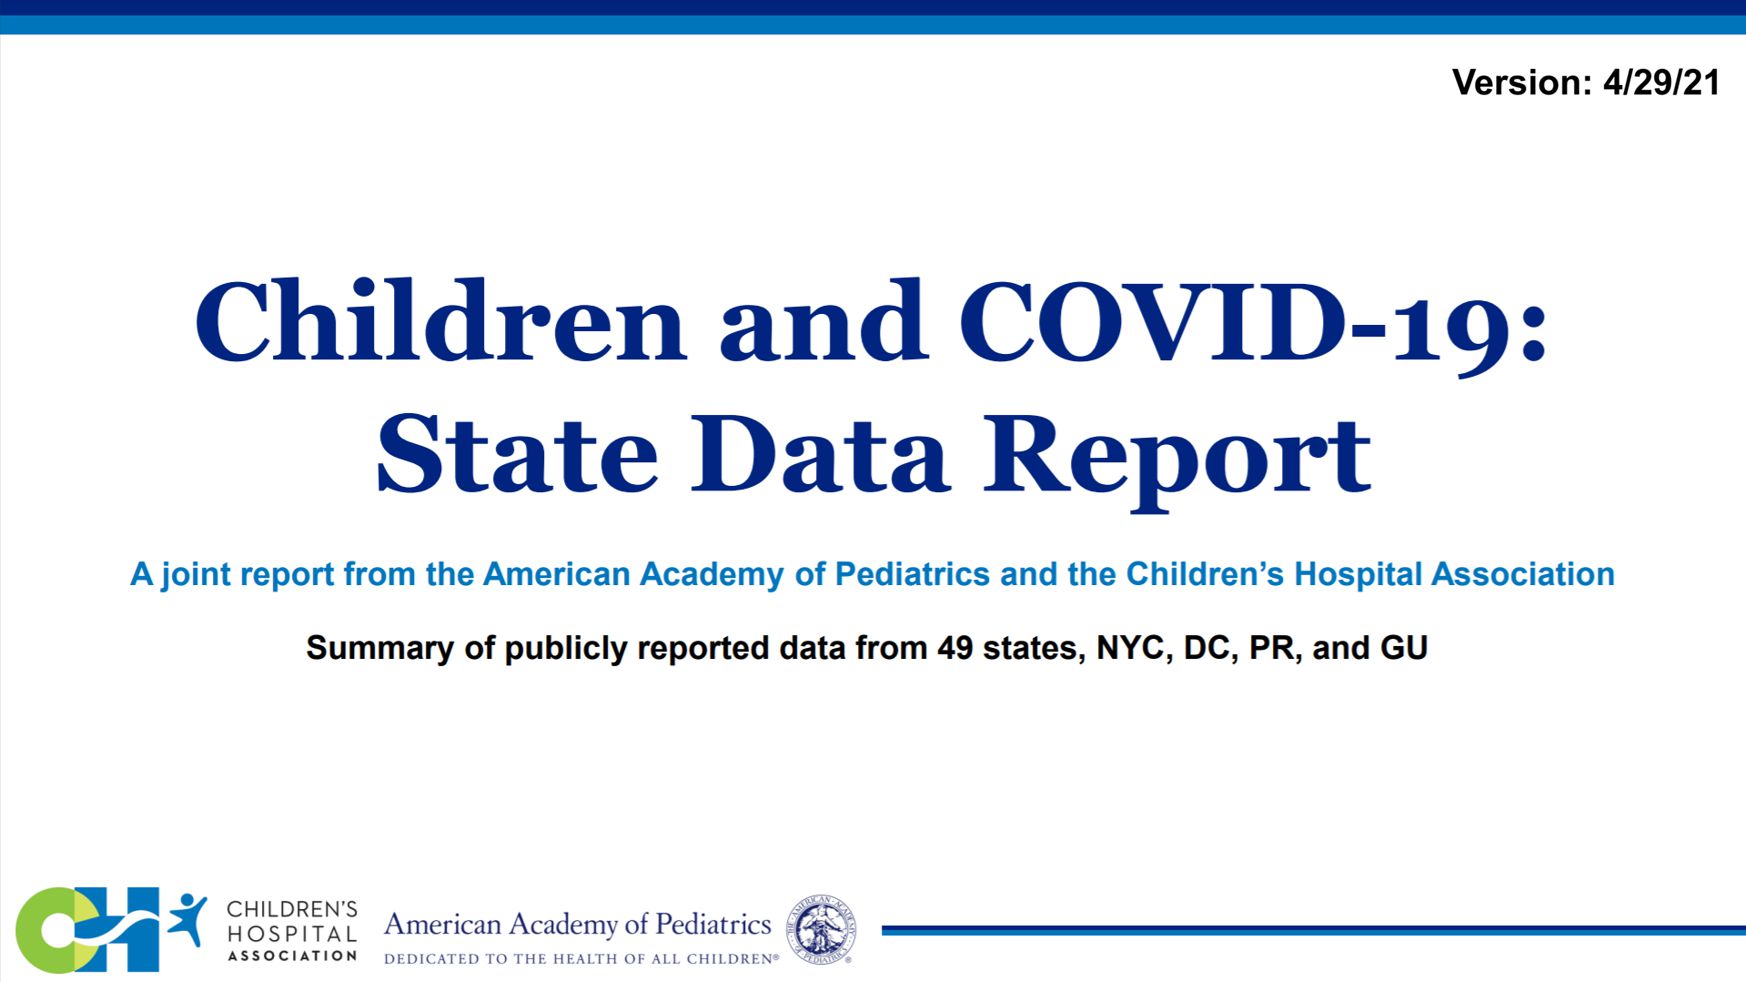 Children and COVID-19: State-Level Data Report